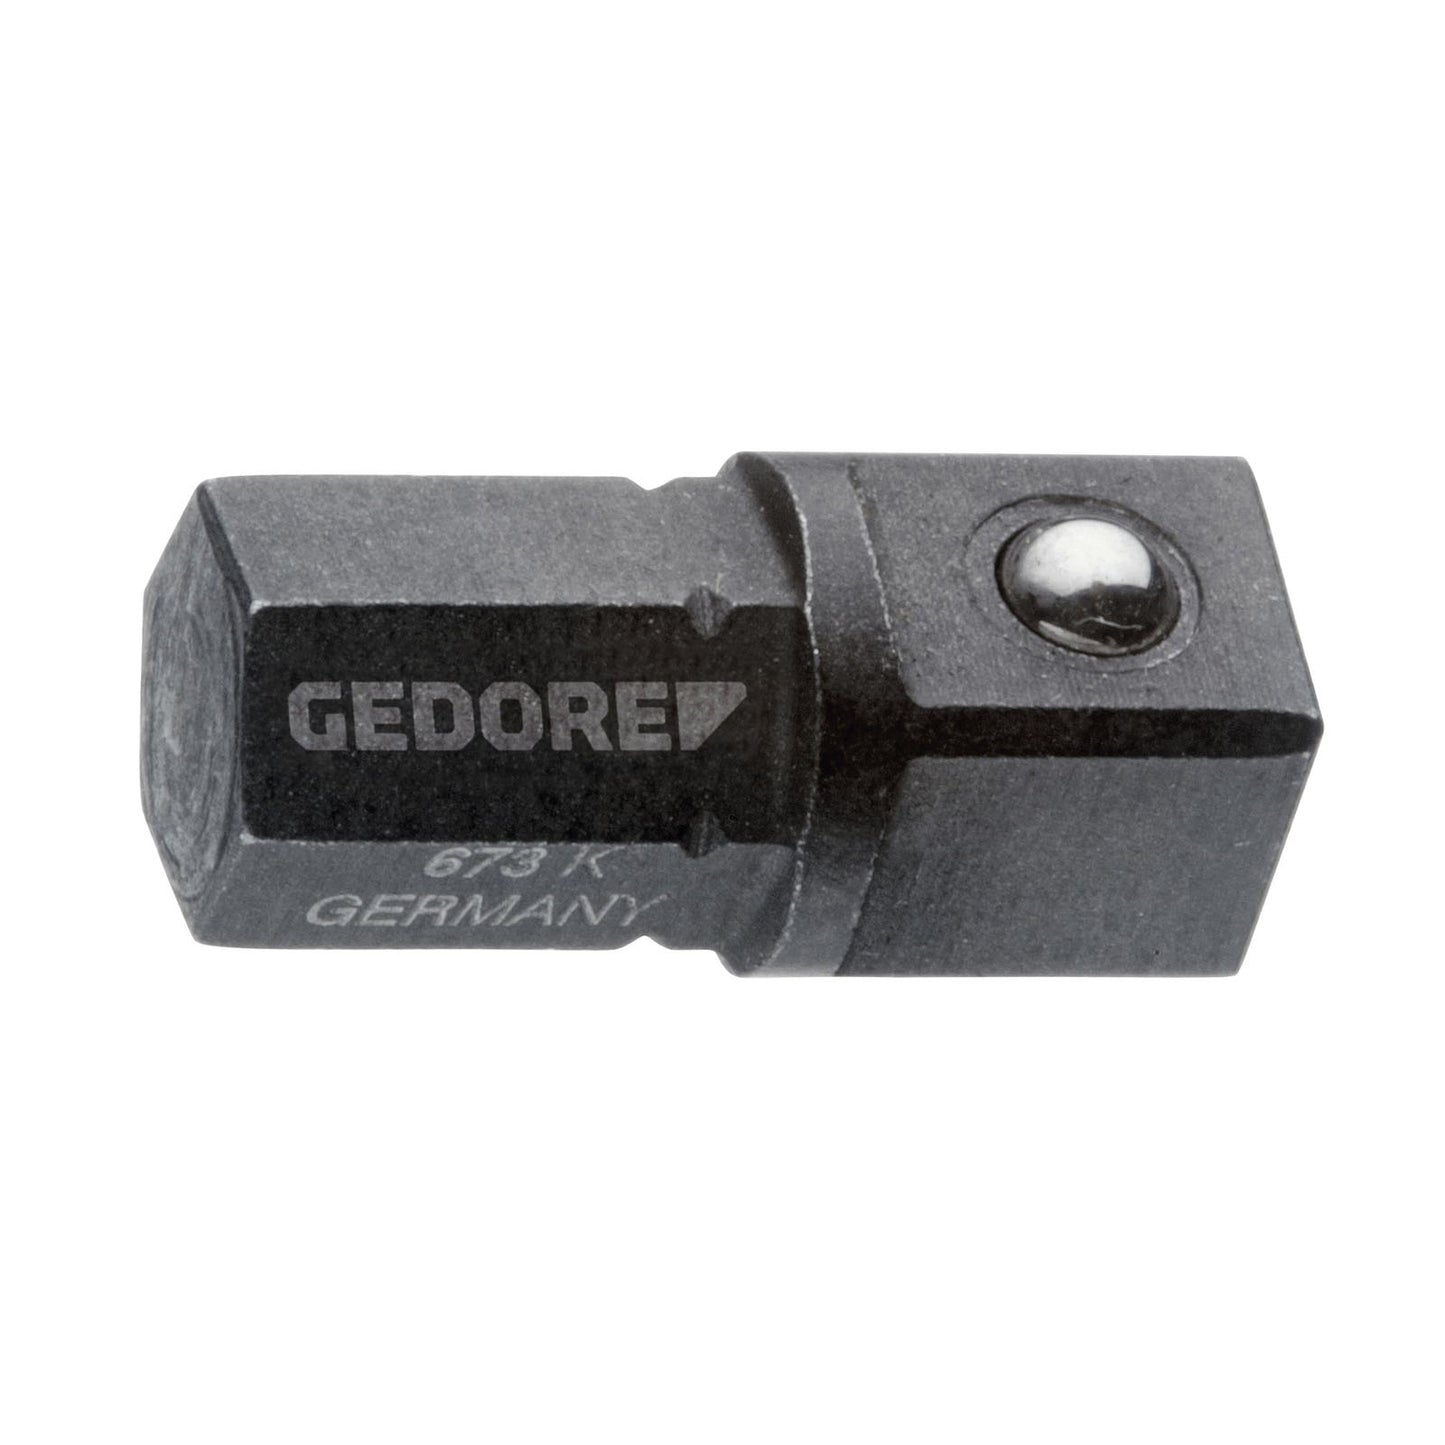 GEDORE 673 K - Adaptador Hex 1/4" x Cuad 1/4" (2000245)